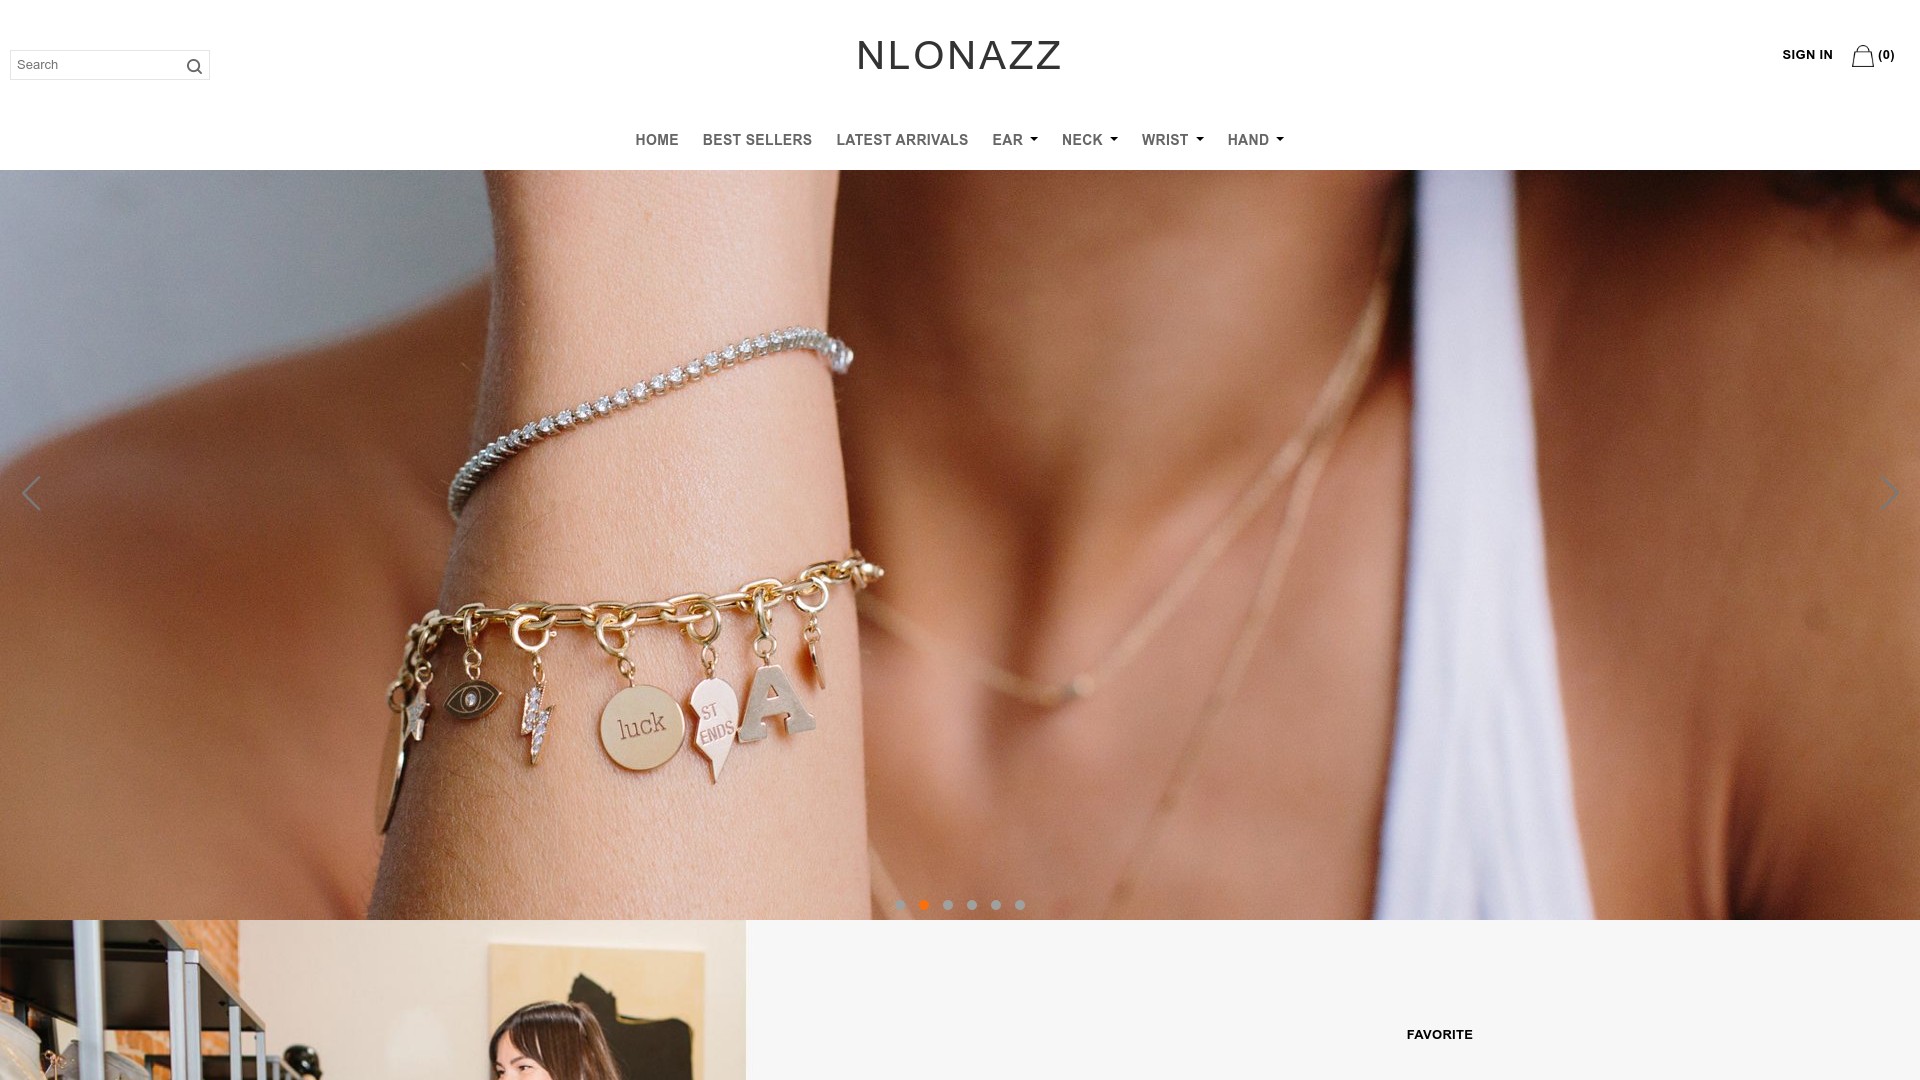 Nlonazz at nlonazz.com